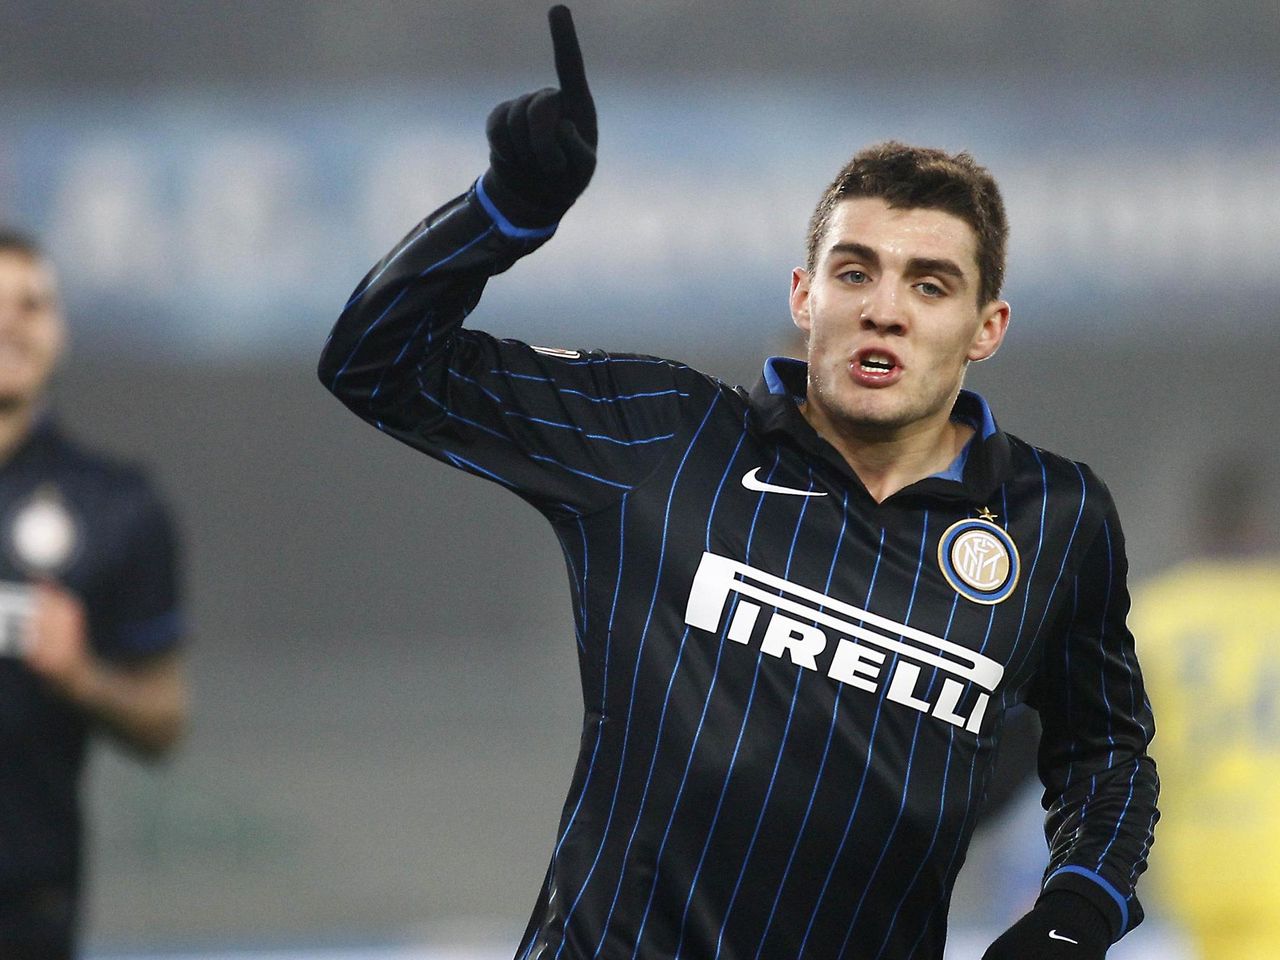 composiet Sobriquette bedrag Roberto Mancini's Inter Milan climb table with win at Chievo - Eurosport